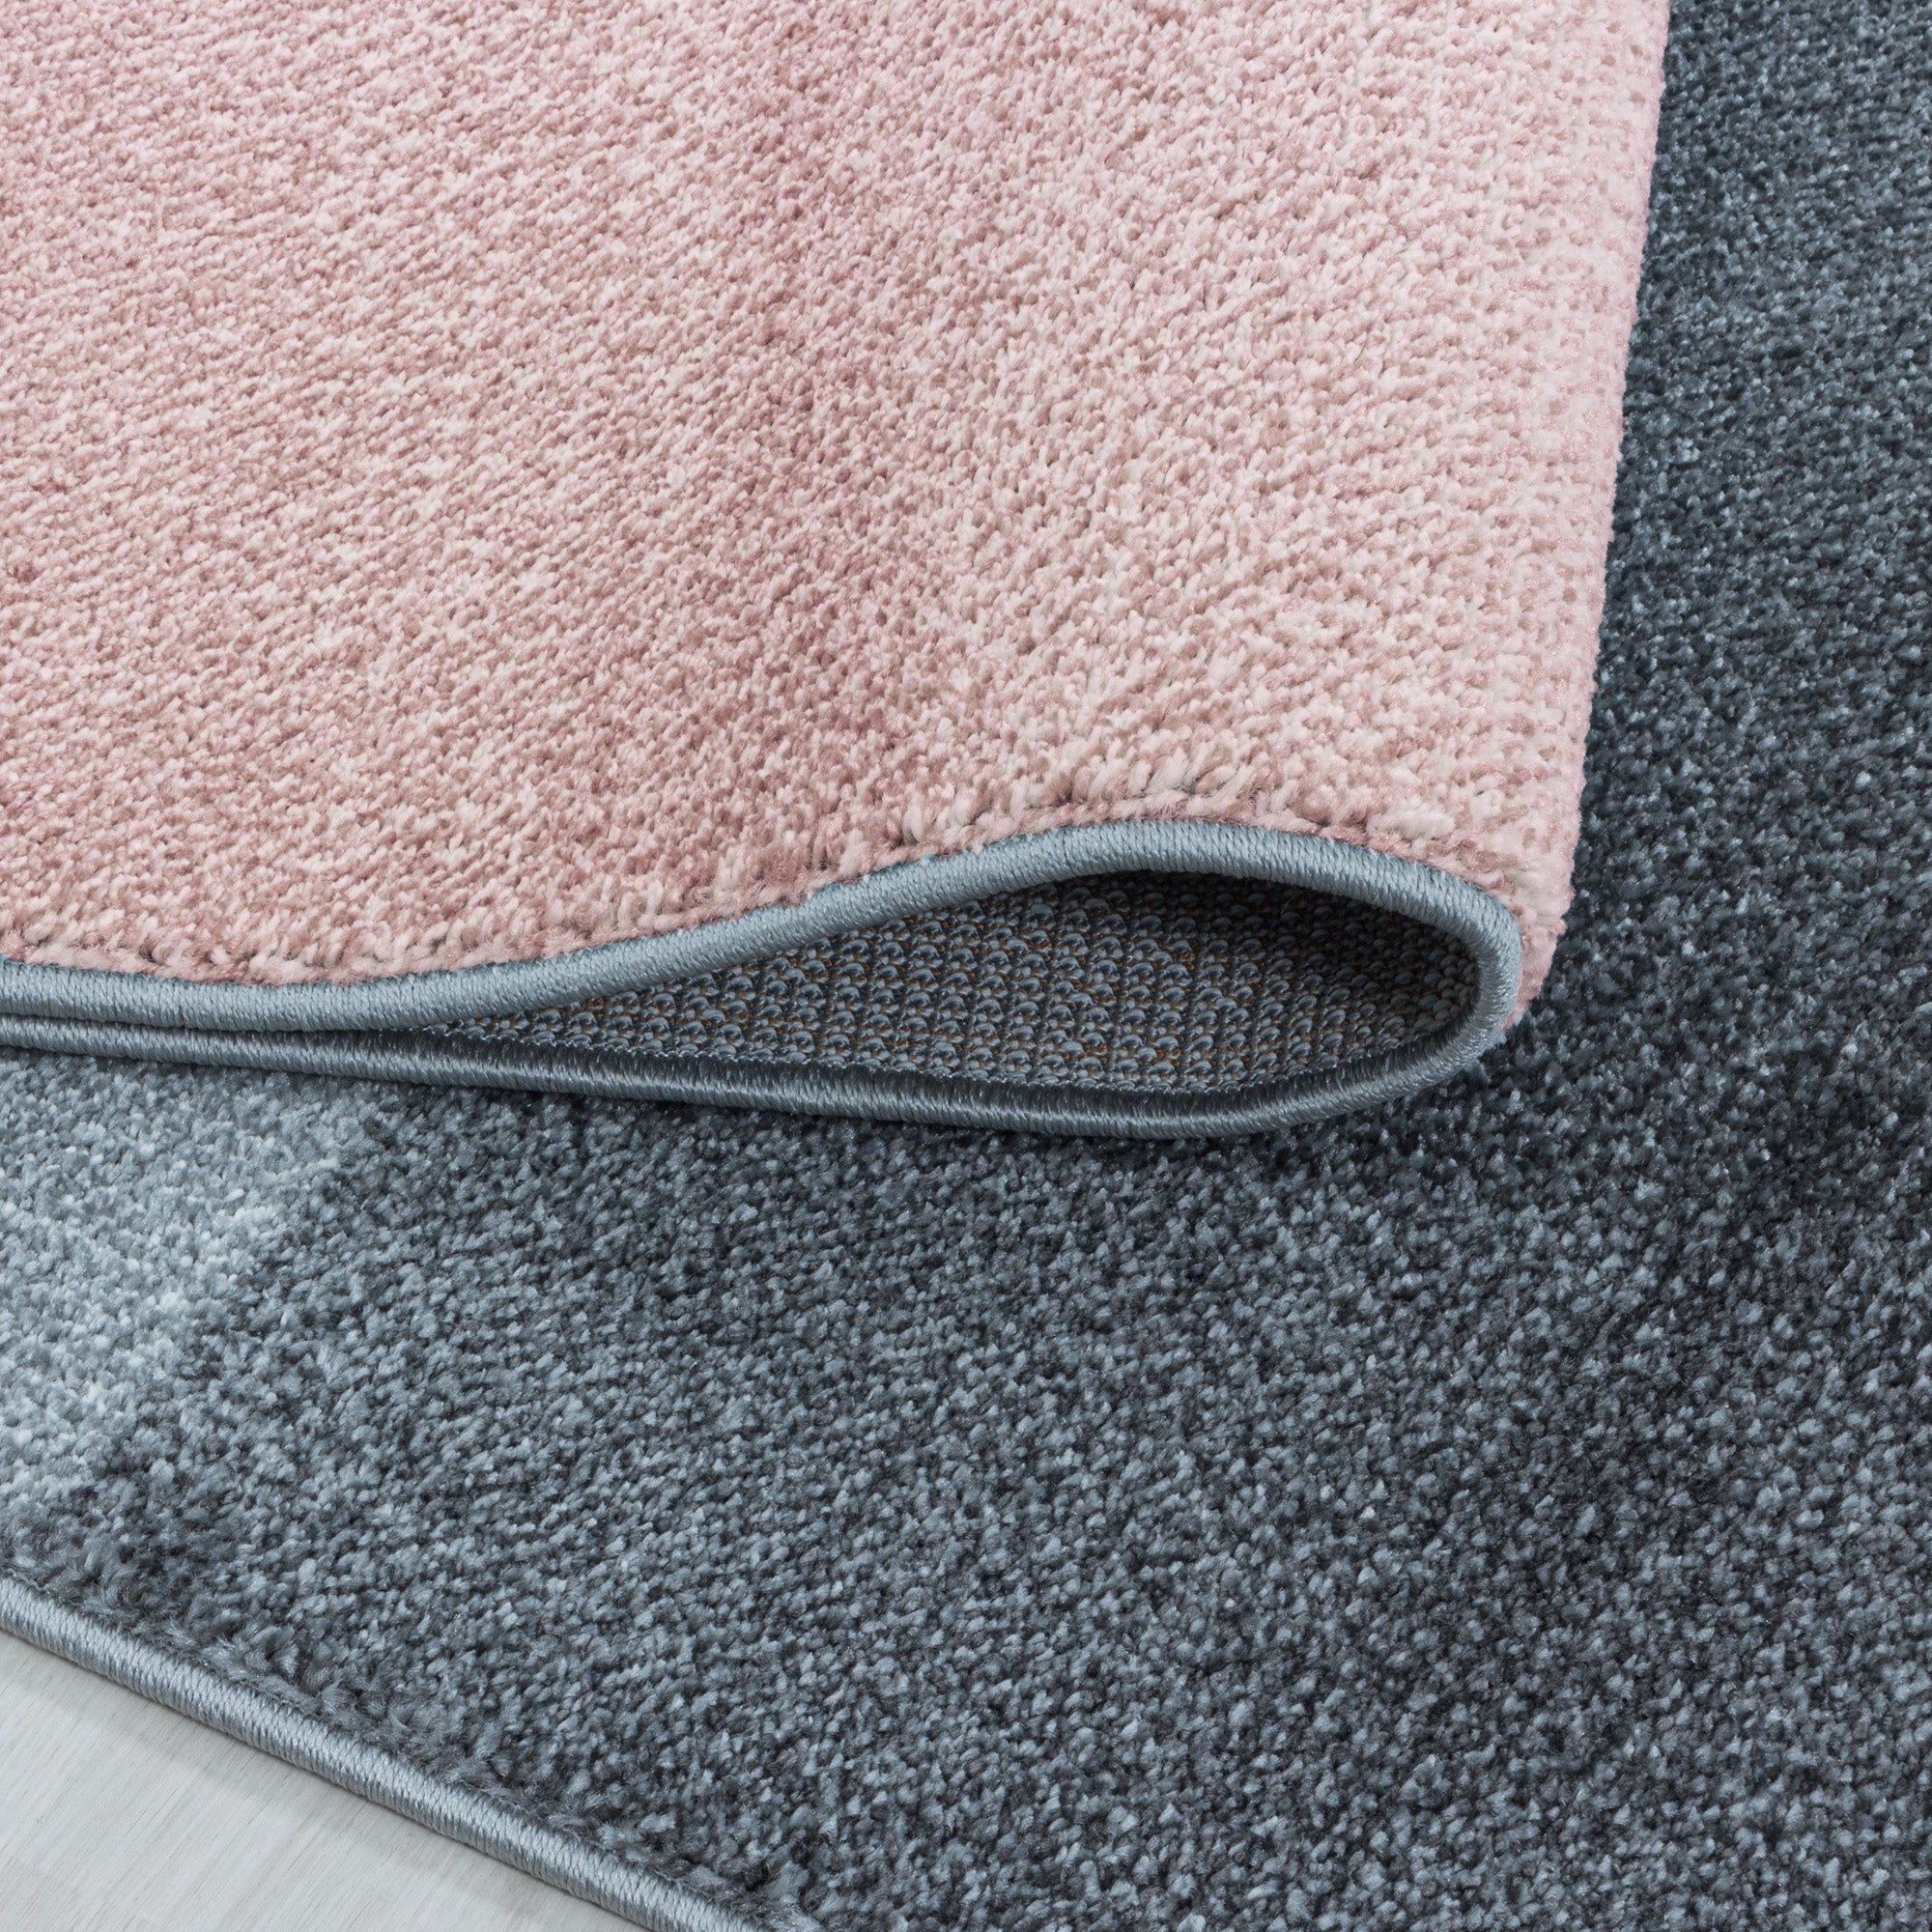 Kurzflor Design Teppich Wohnzimmerteppich Zipcode Muster Rechteck Soft Flor Rose